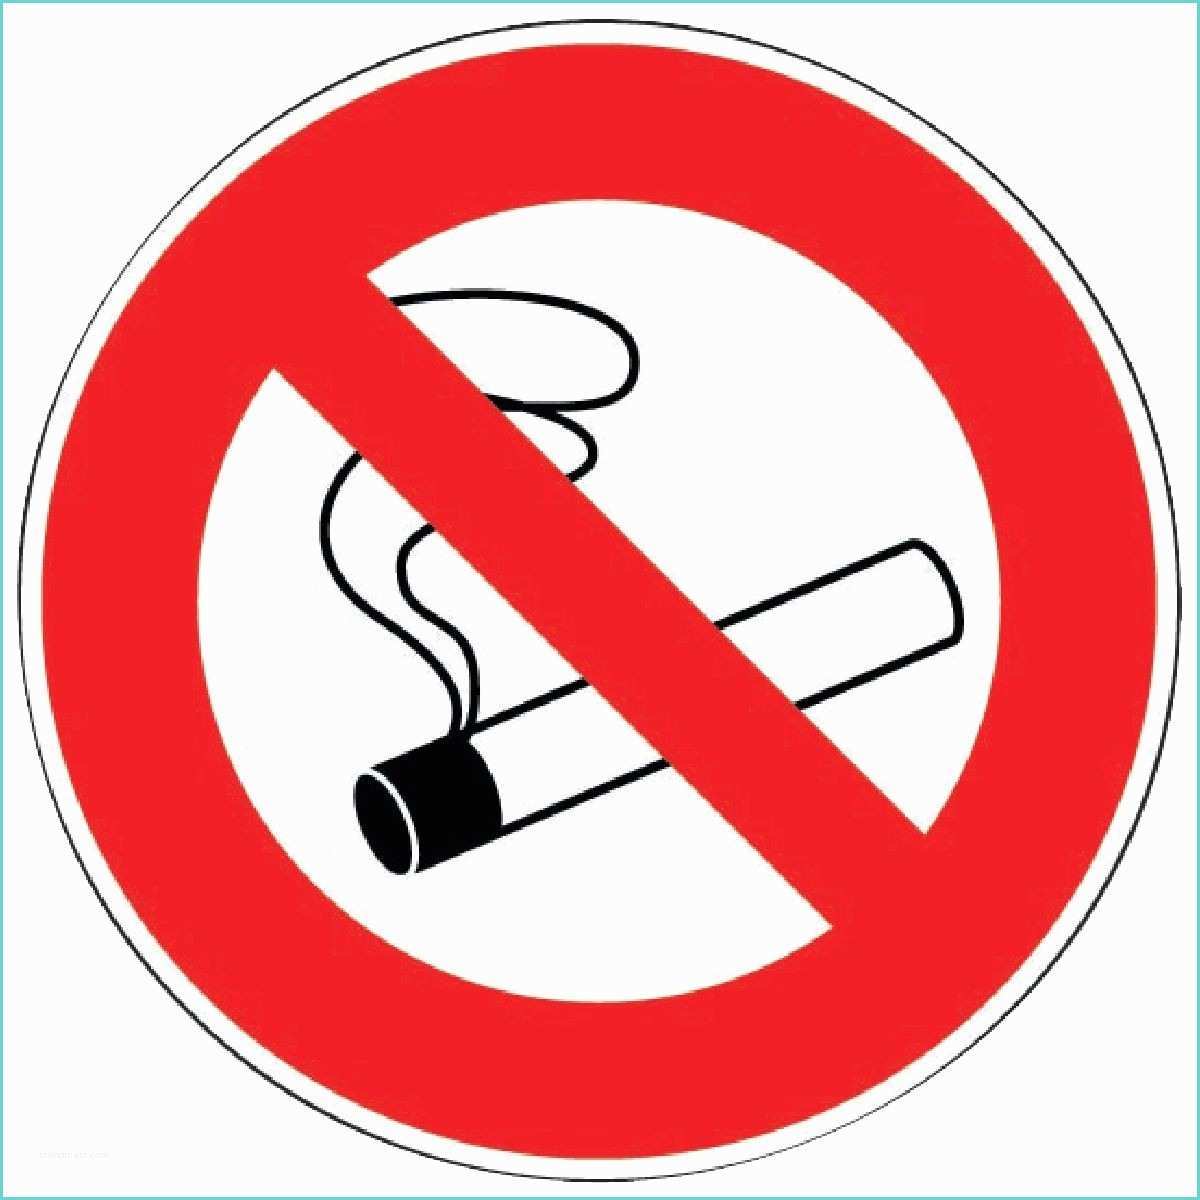 Dessin Interdiction De Fumer Logo Interdiction De Fumer Gratuit à Imprimer